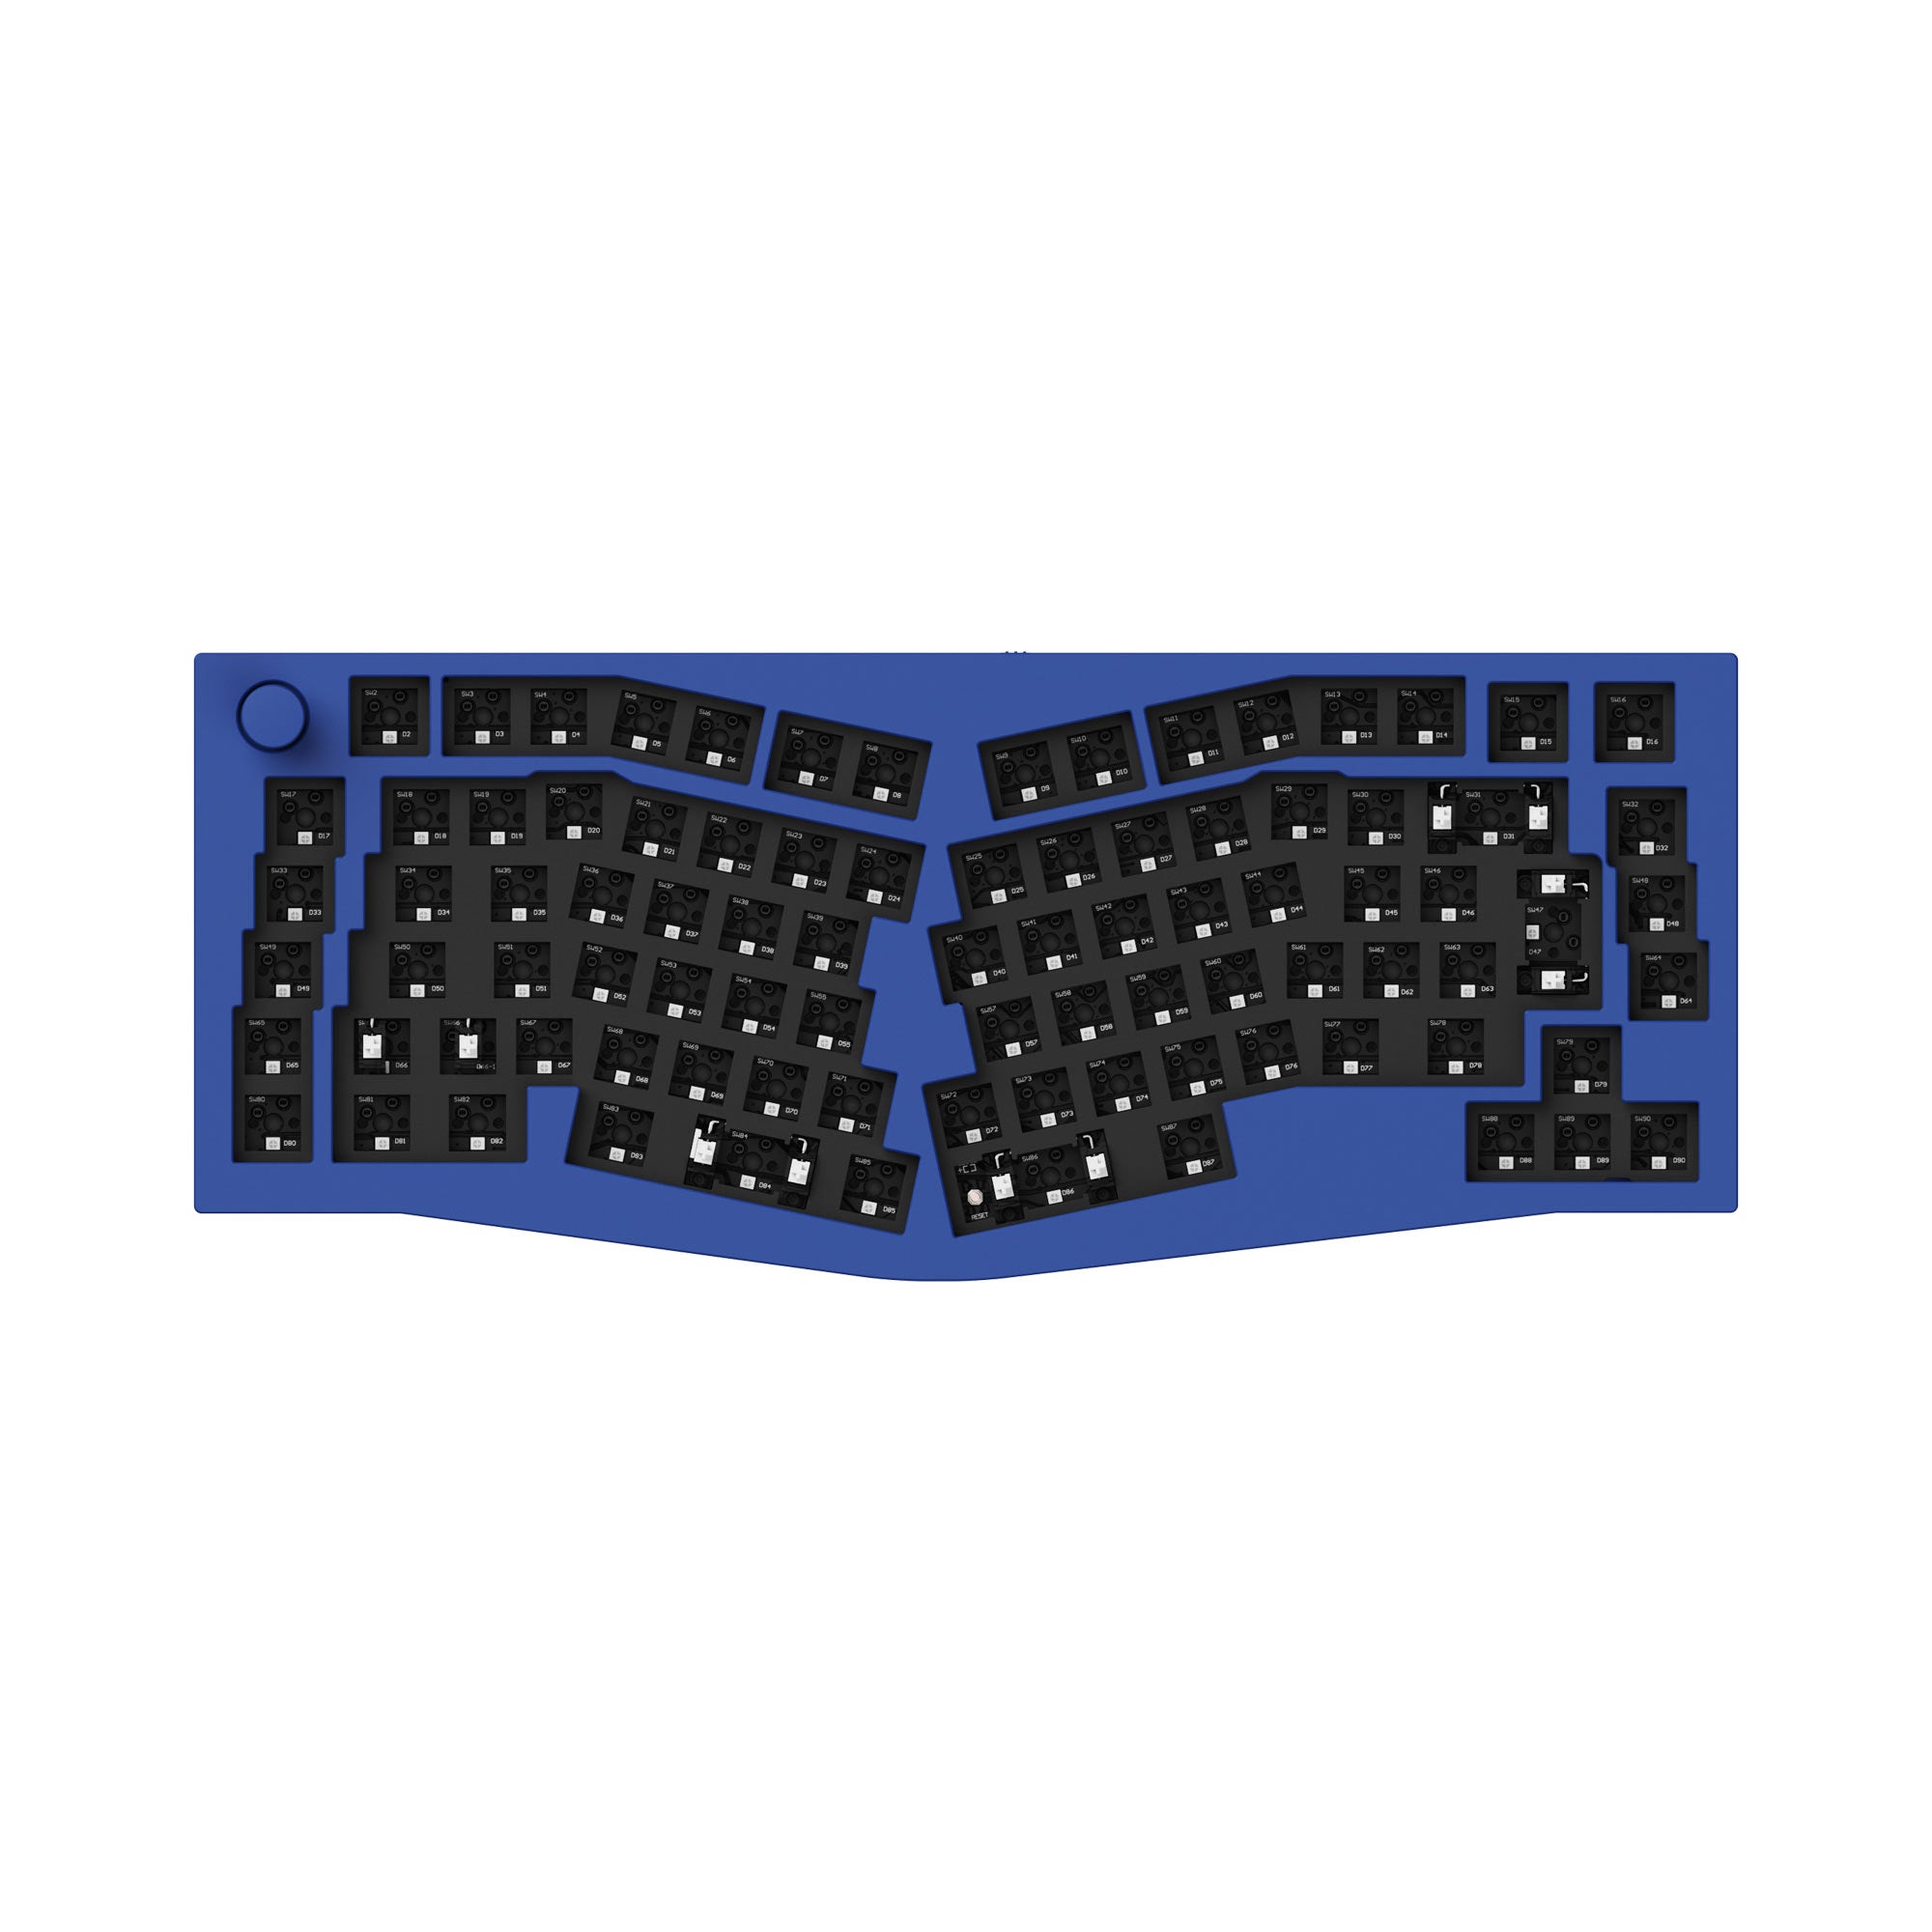 Keychron Q10 QMK/VIA custom mechanical keyboard 75% layout Alice layout ISO knob version for Mac Windows Linux full aluminum frame blue